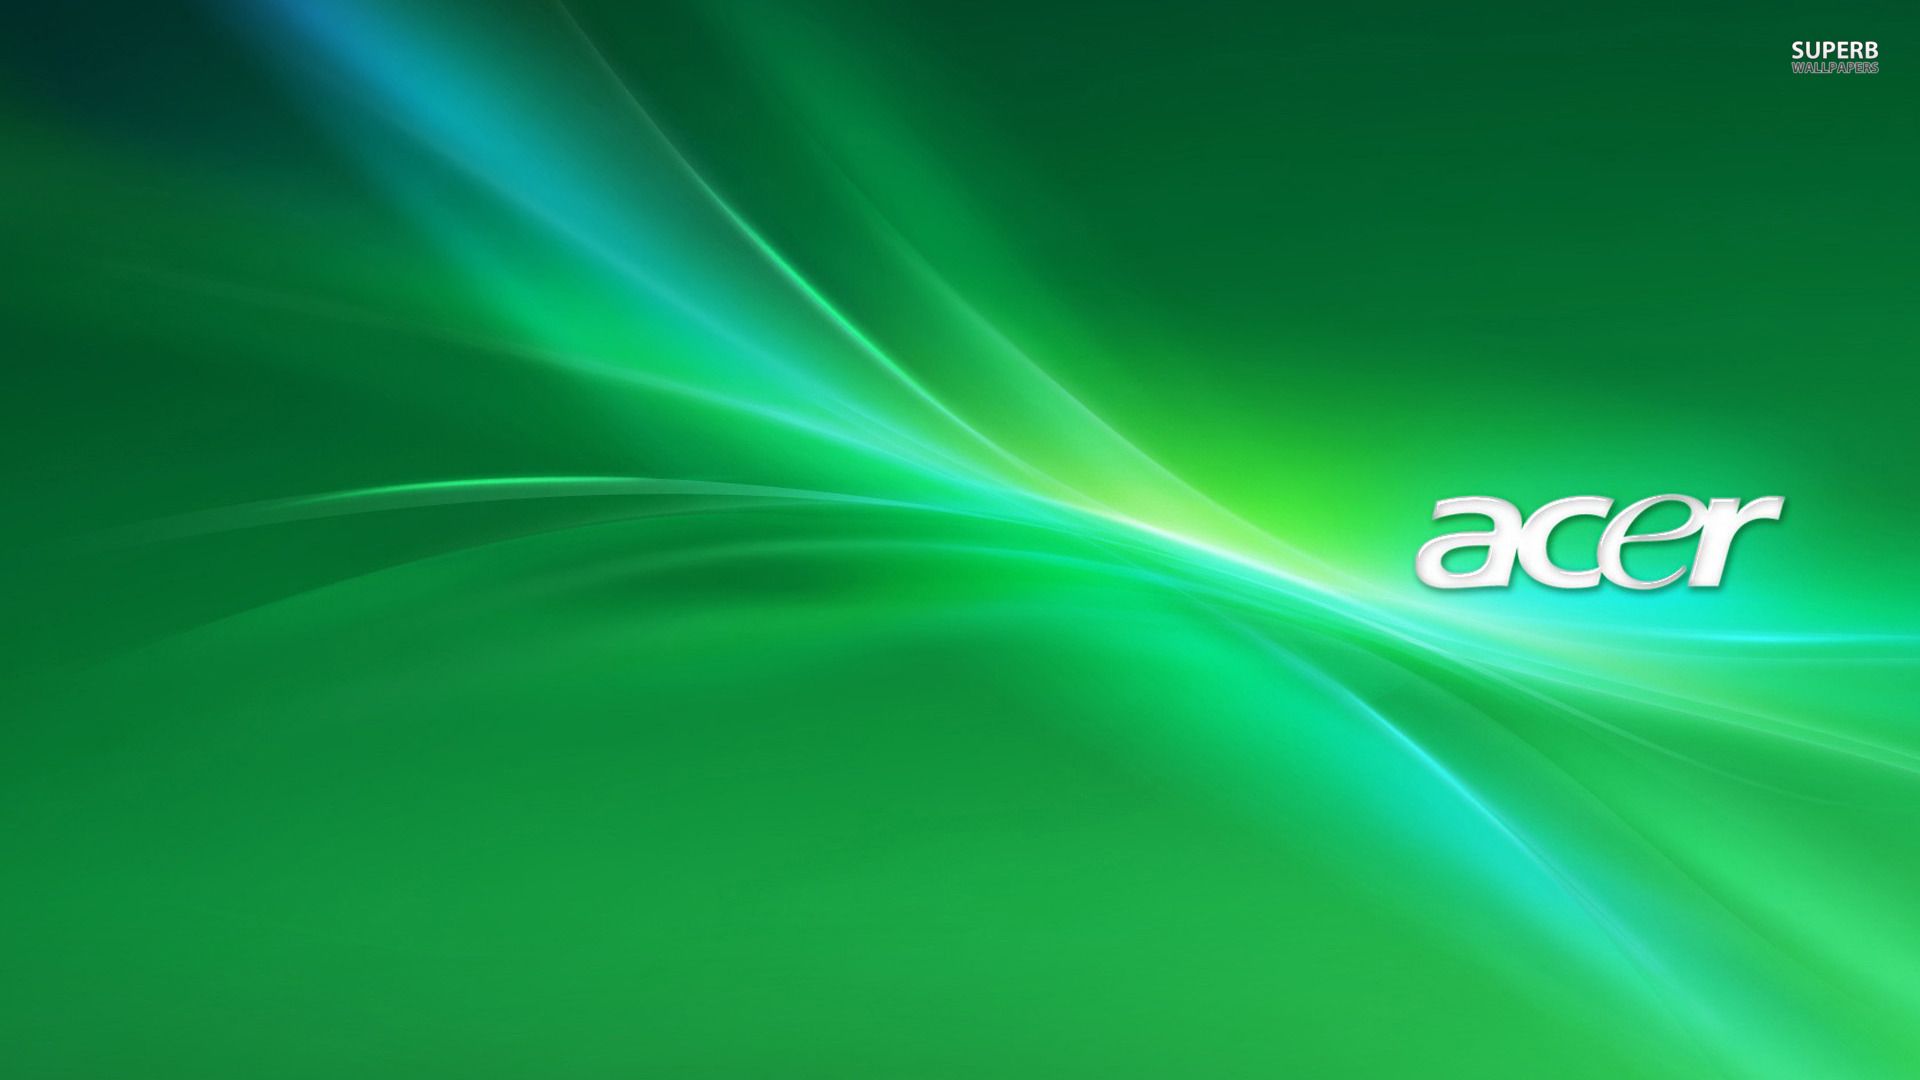 Green Acer logo wallpaper - Computer wallpapers - #17735